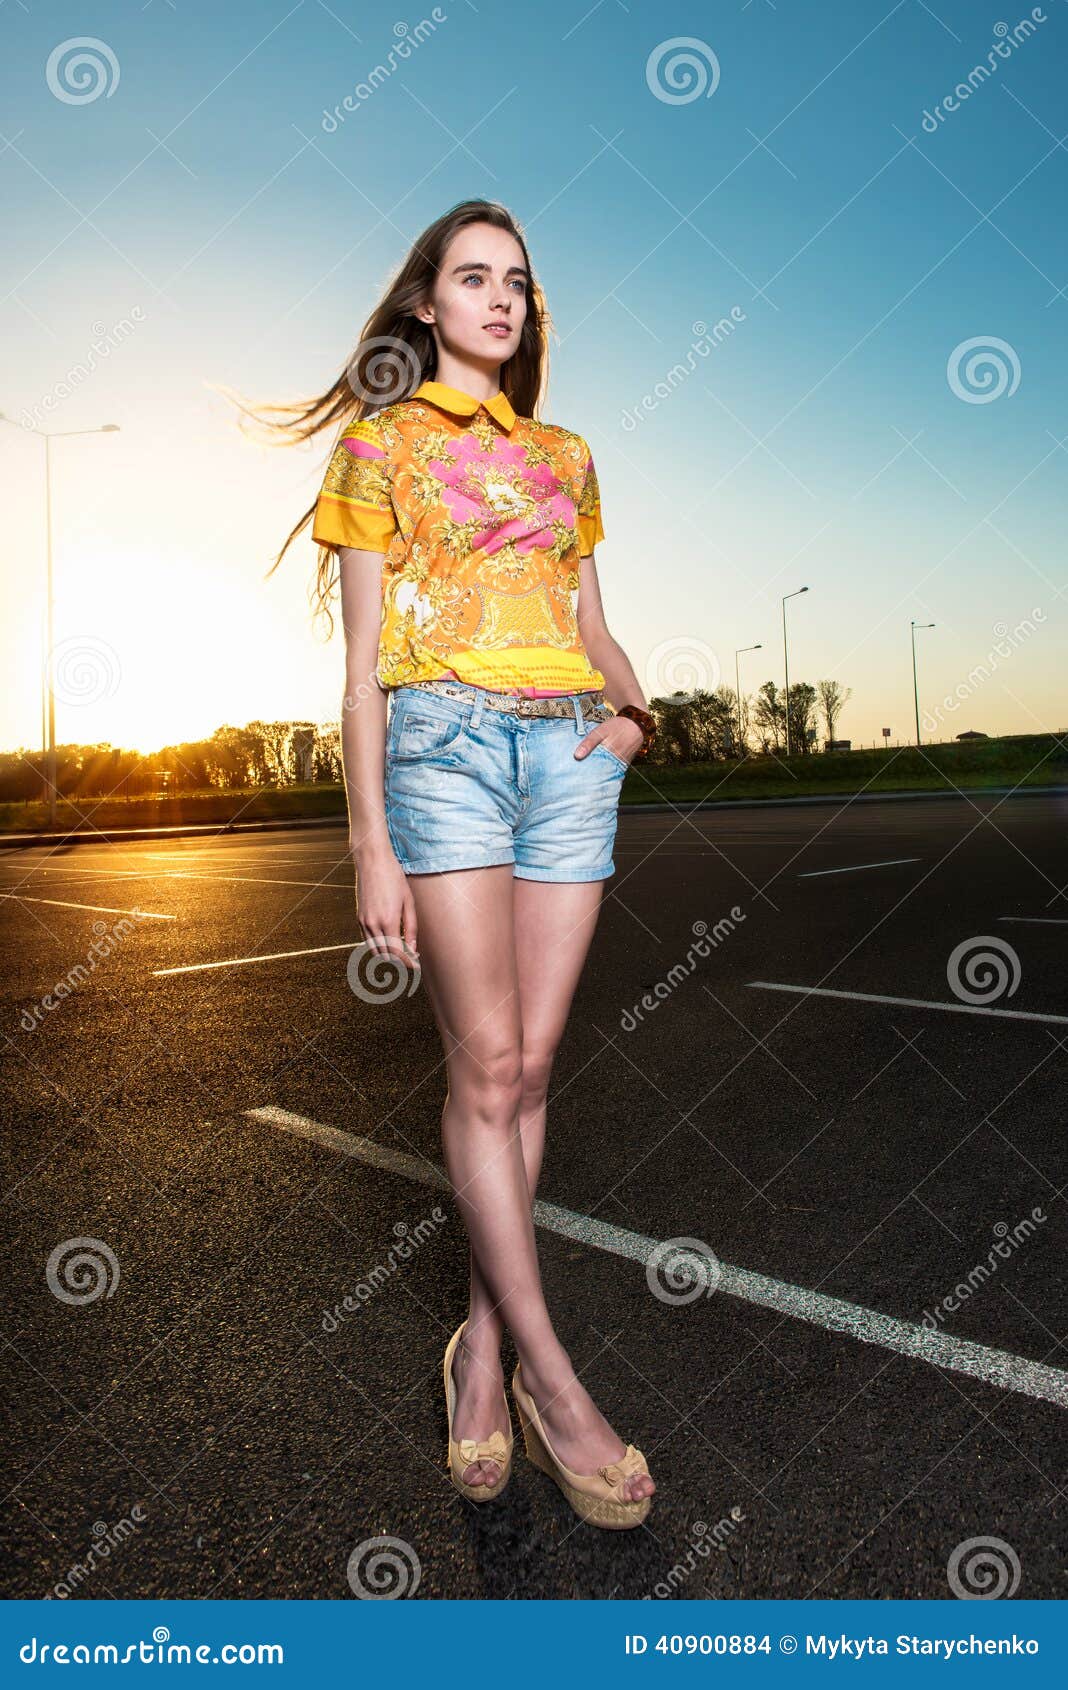 Beautiful Young Woman Walking on Asphalt Road Stock Photo - Image of ...